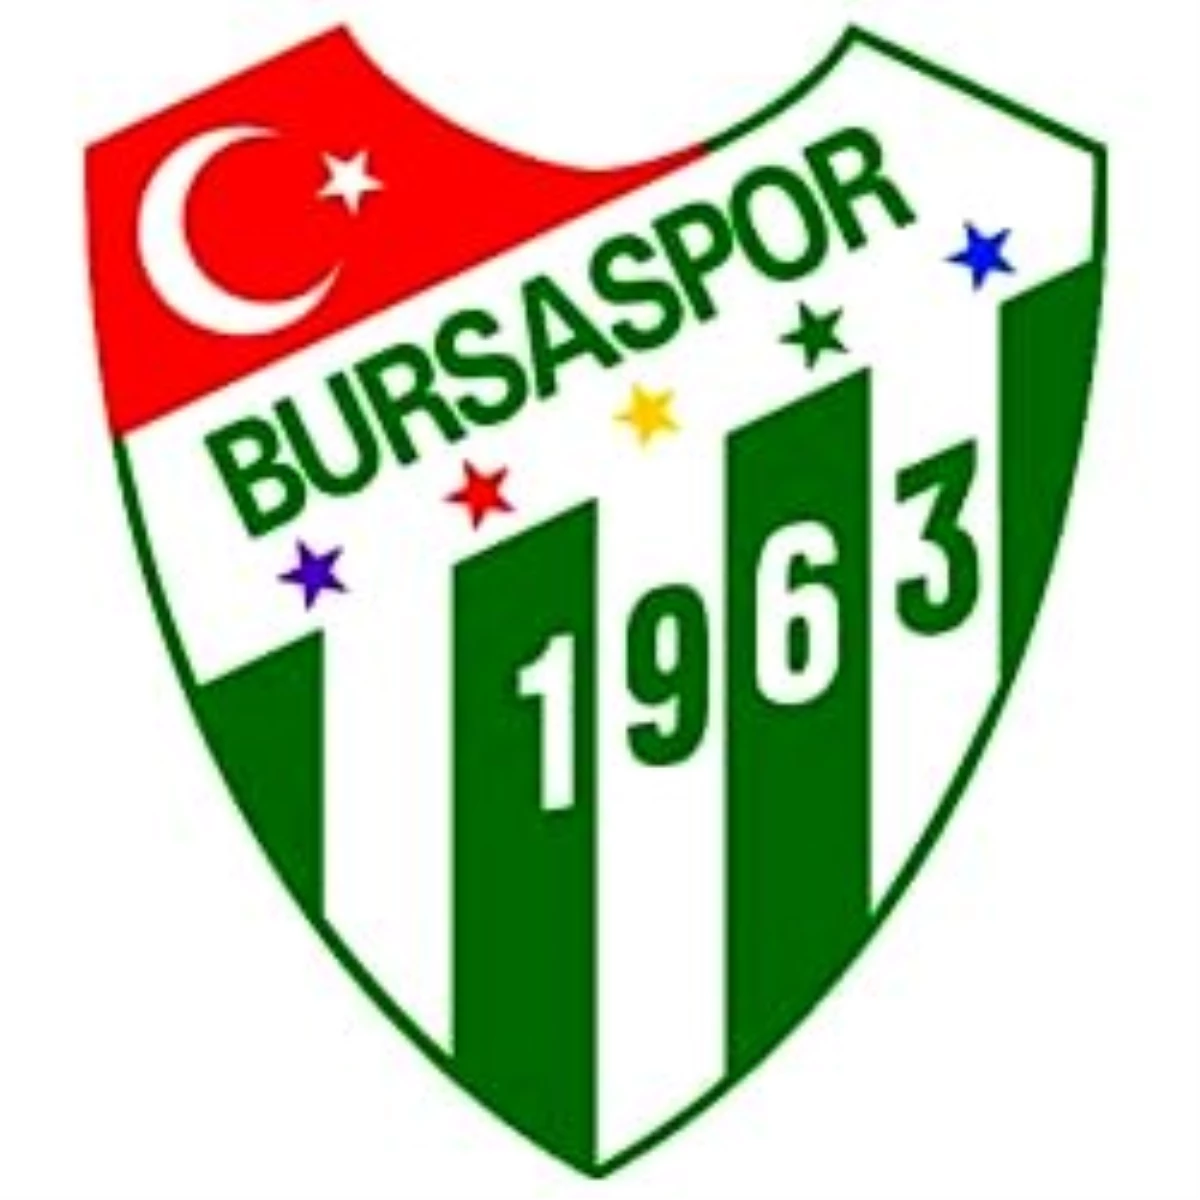 Dha Spor - (Özel) Amatör Kulübün Bursaspor Hayranlığı